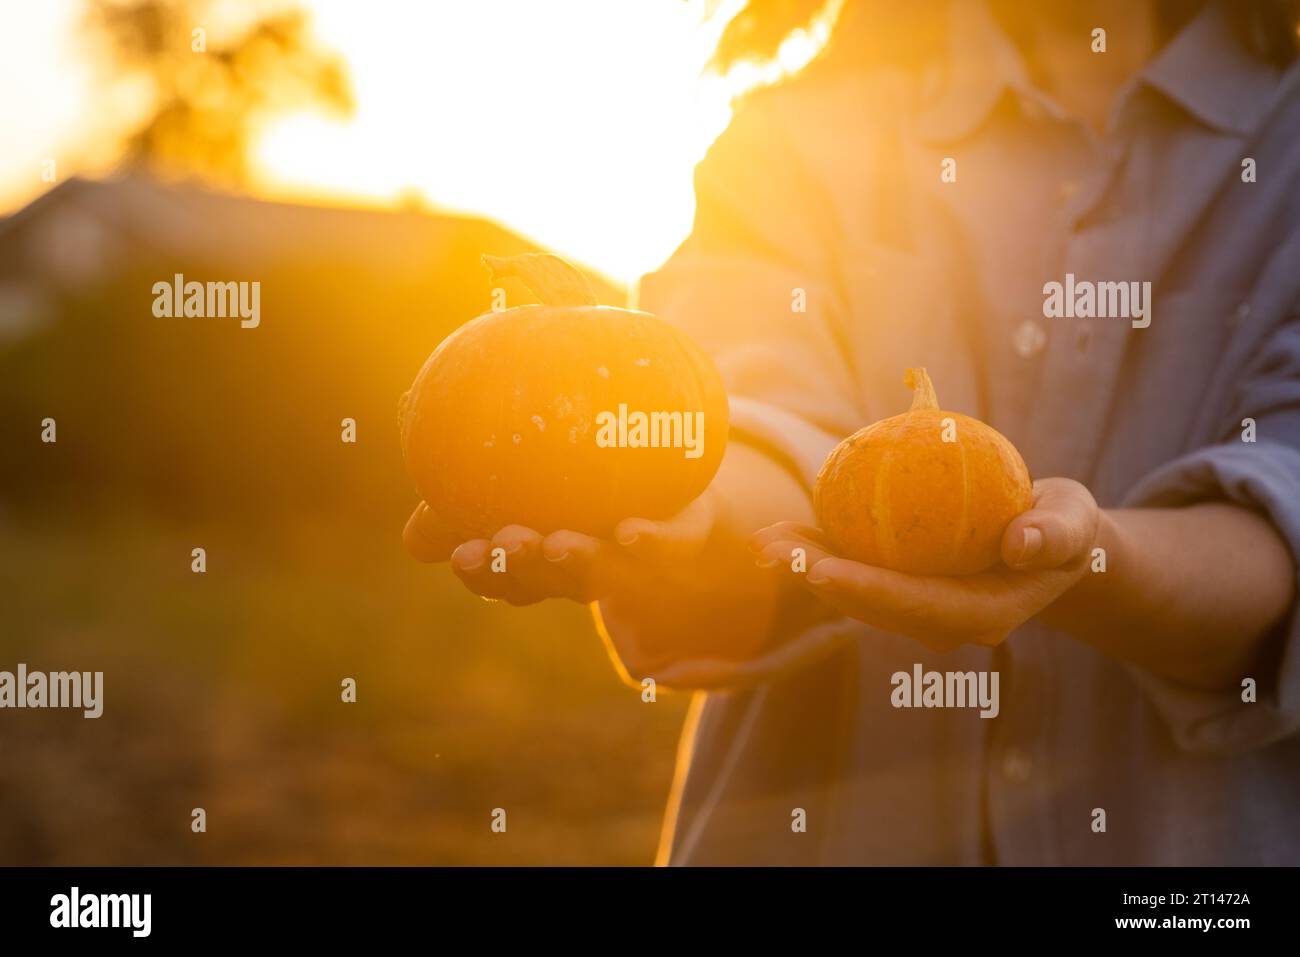 Woman farmer with ripe pumpkin. Stock Photo